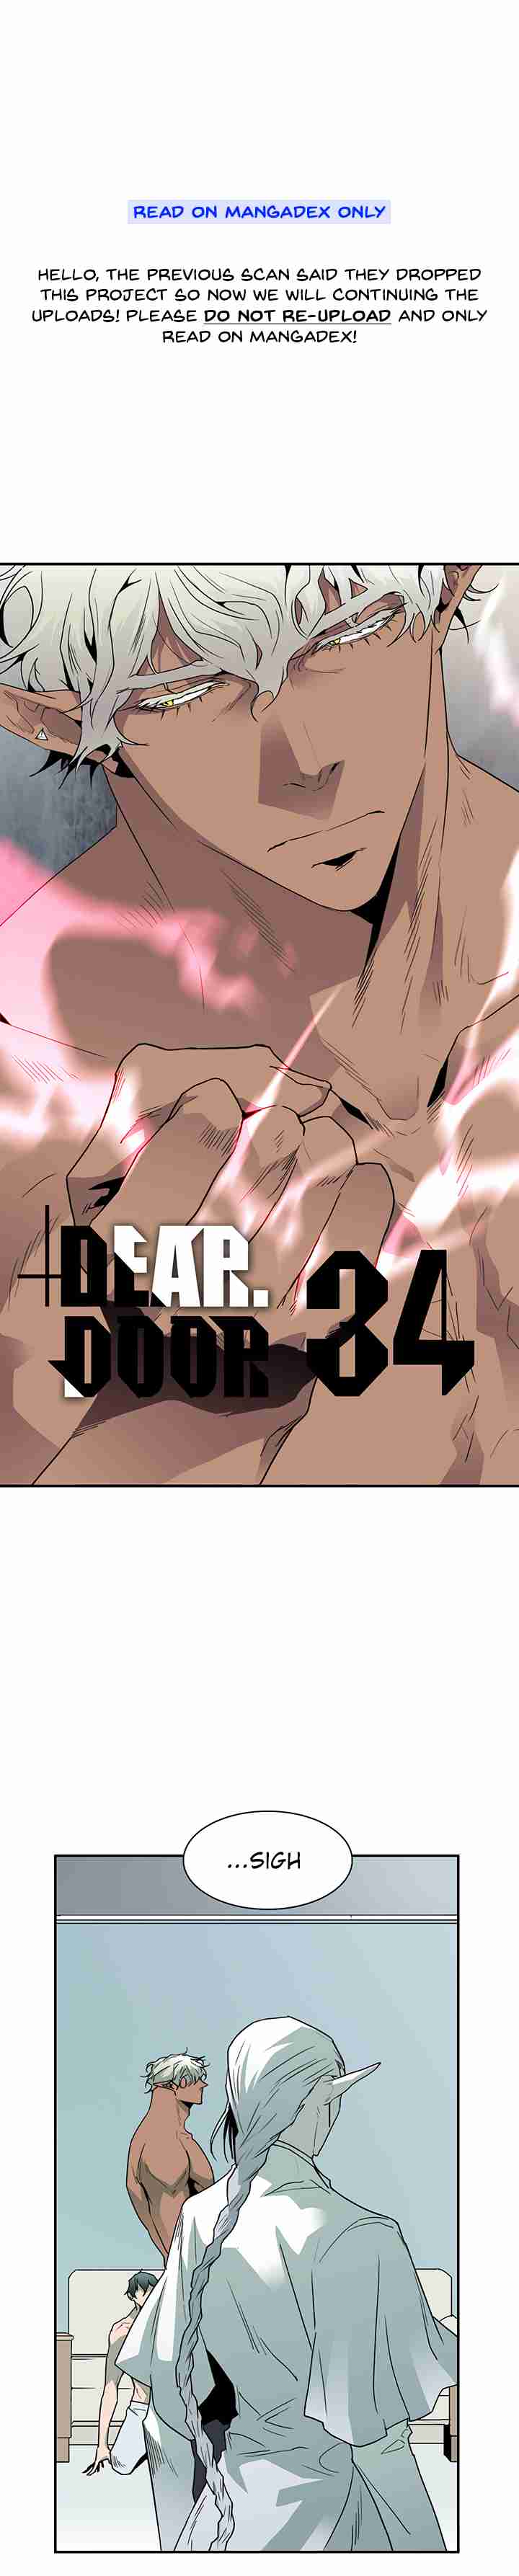 Dear Door Ch. 34